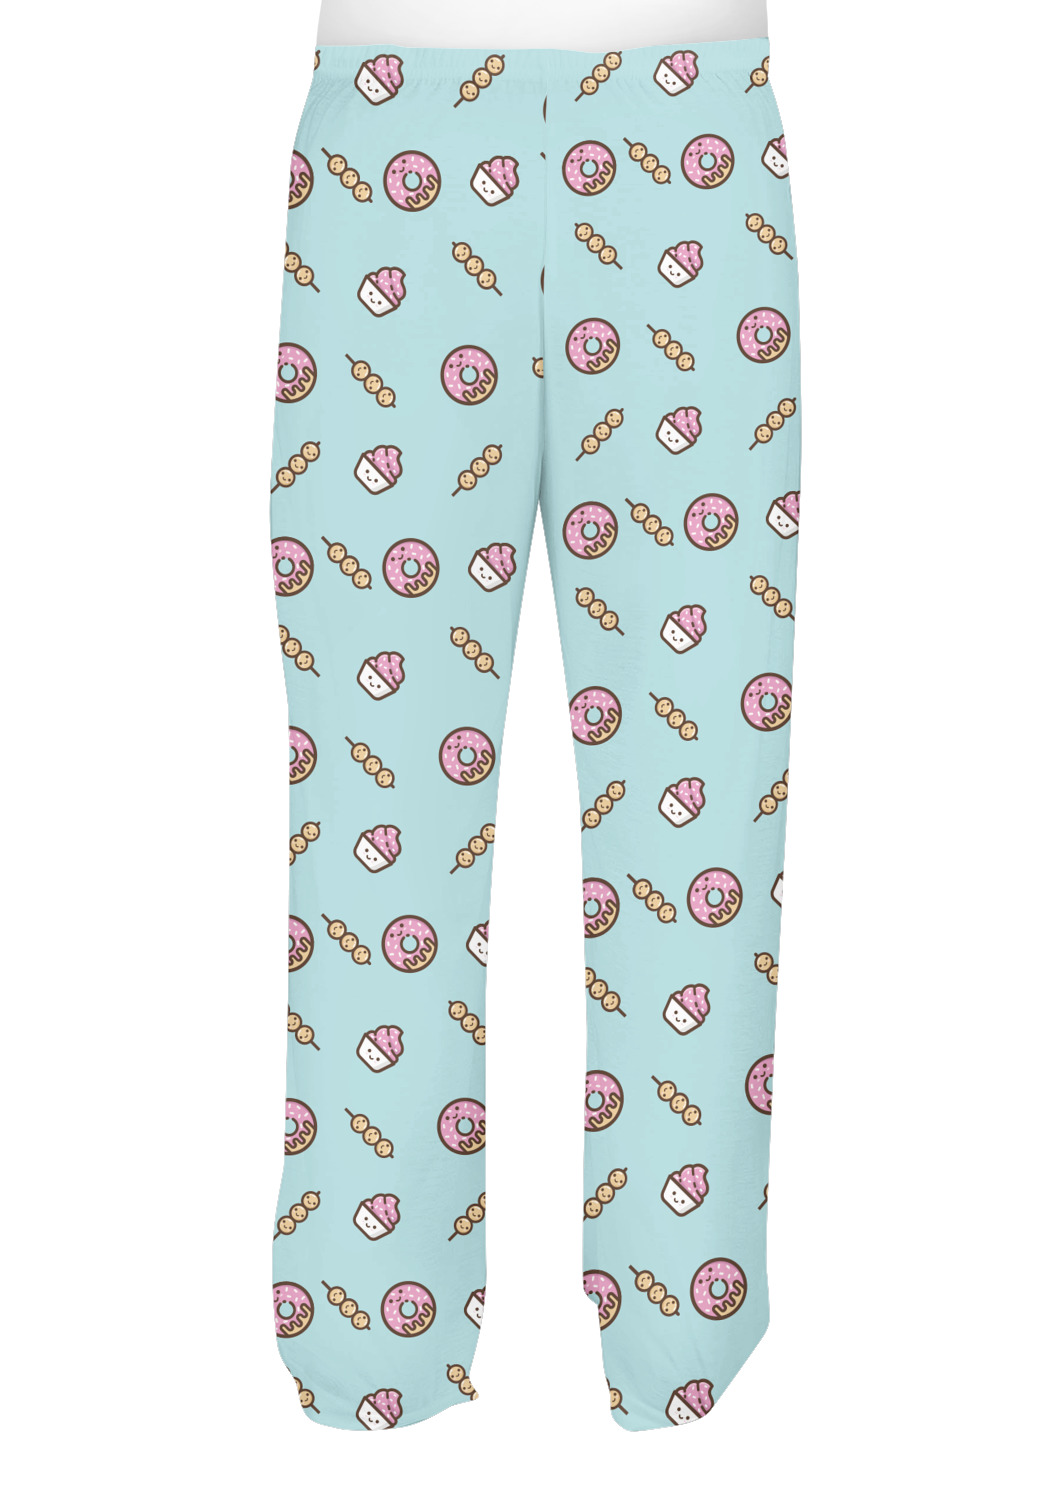 Custom Donuts Mens Pajama Pants - M | YouCustomizeIt